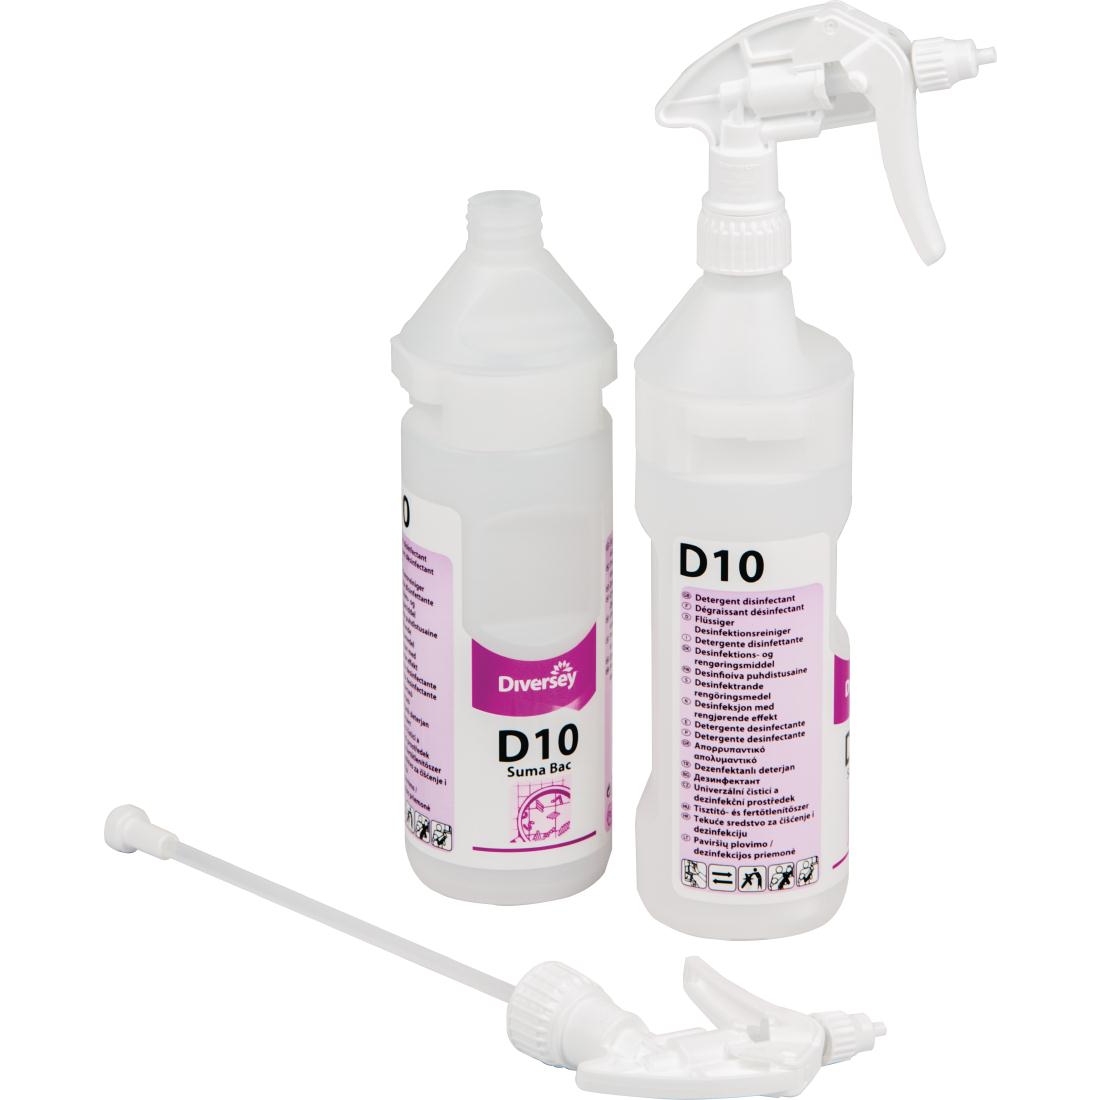 Divermite D10 Cleaner Disinfectant Refill Bottles 750ml (Pack of 2)